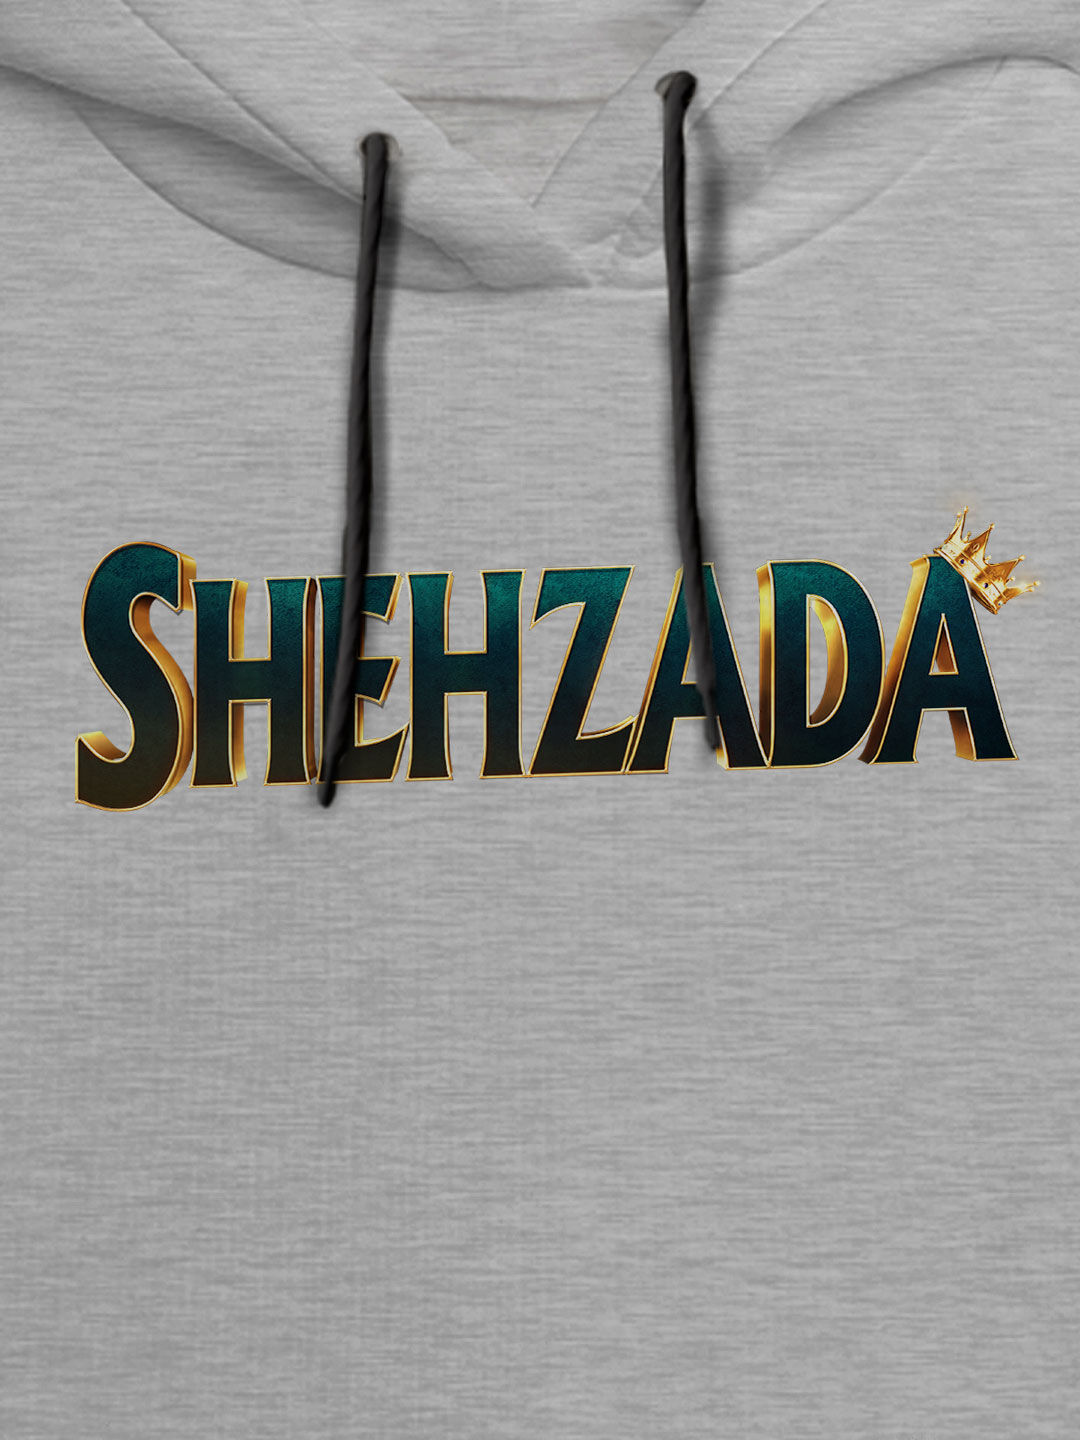 Shehzada - movie: where to watch stream online